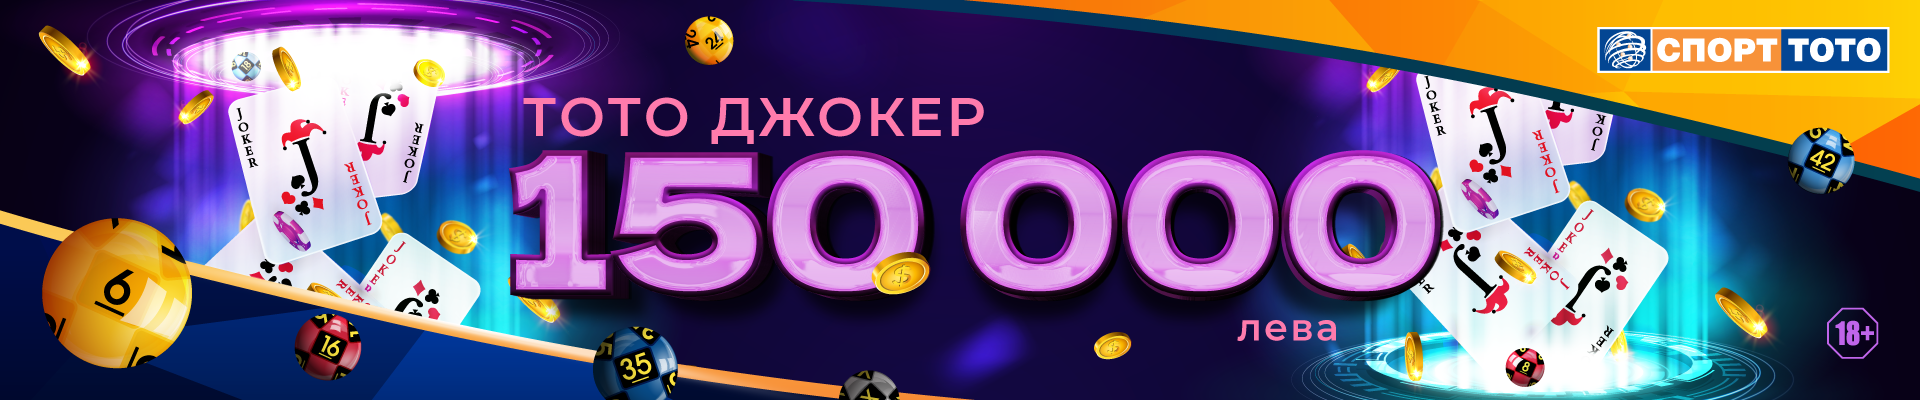 Тото Джокер 150 000